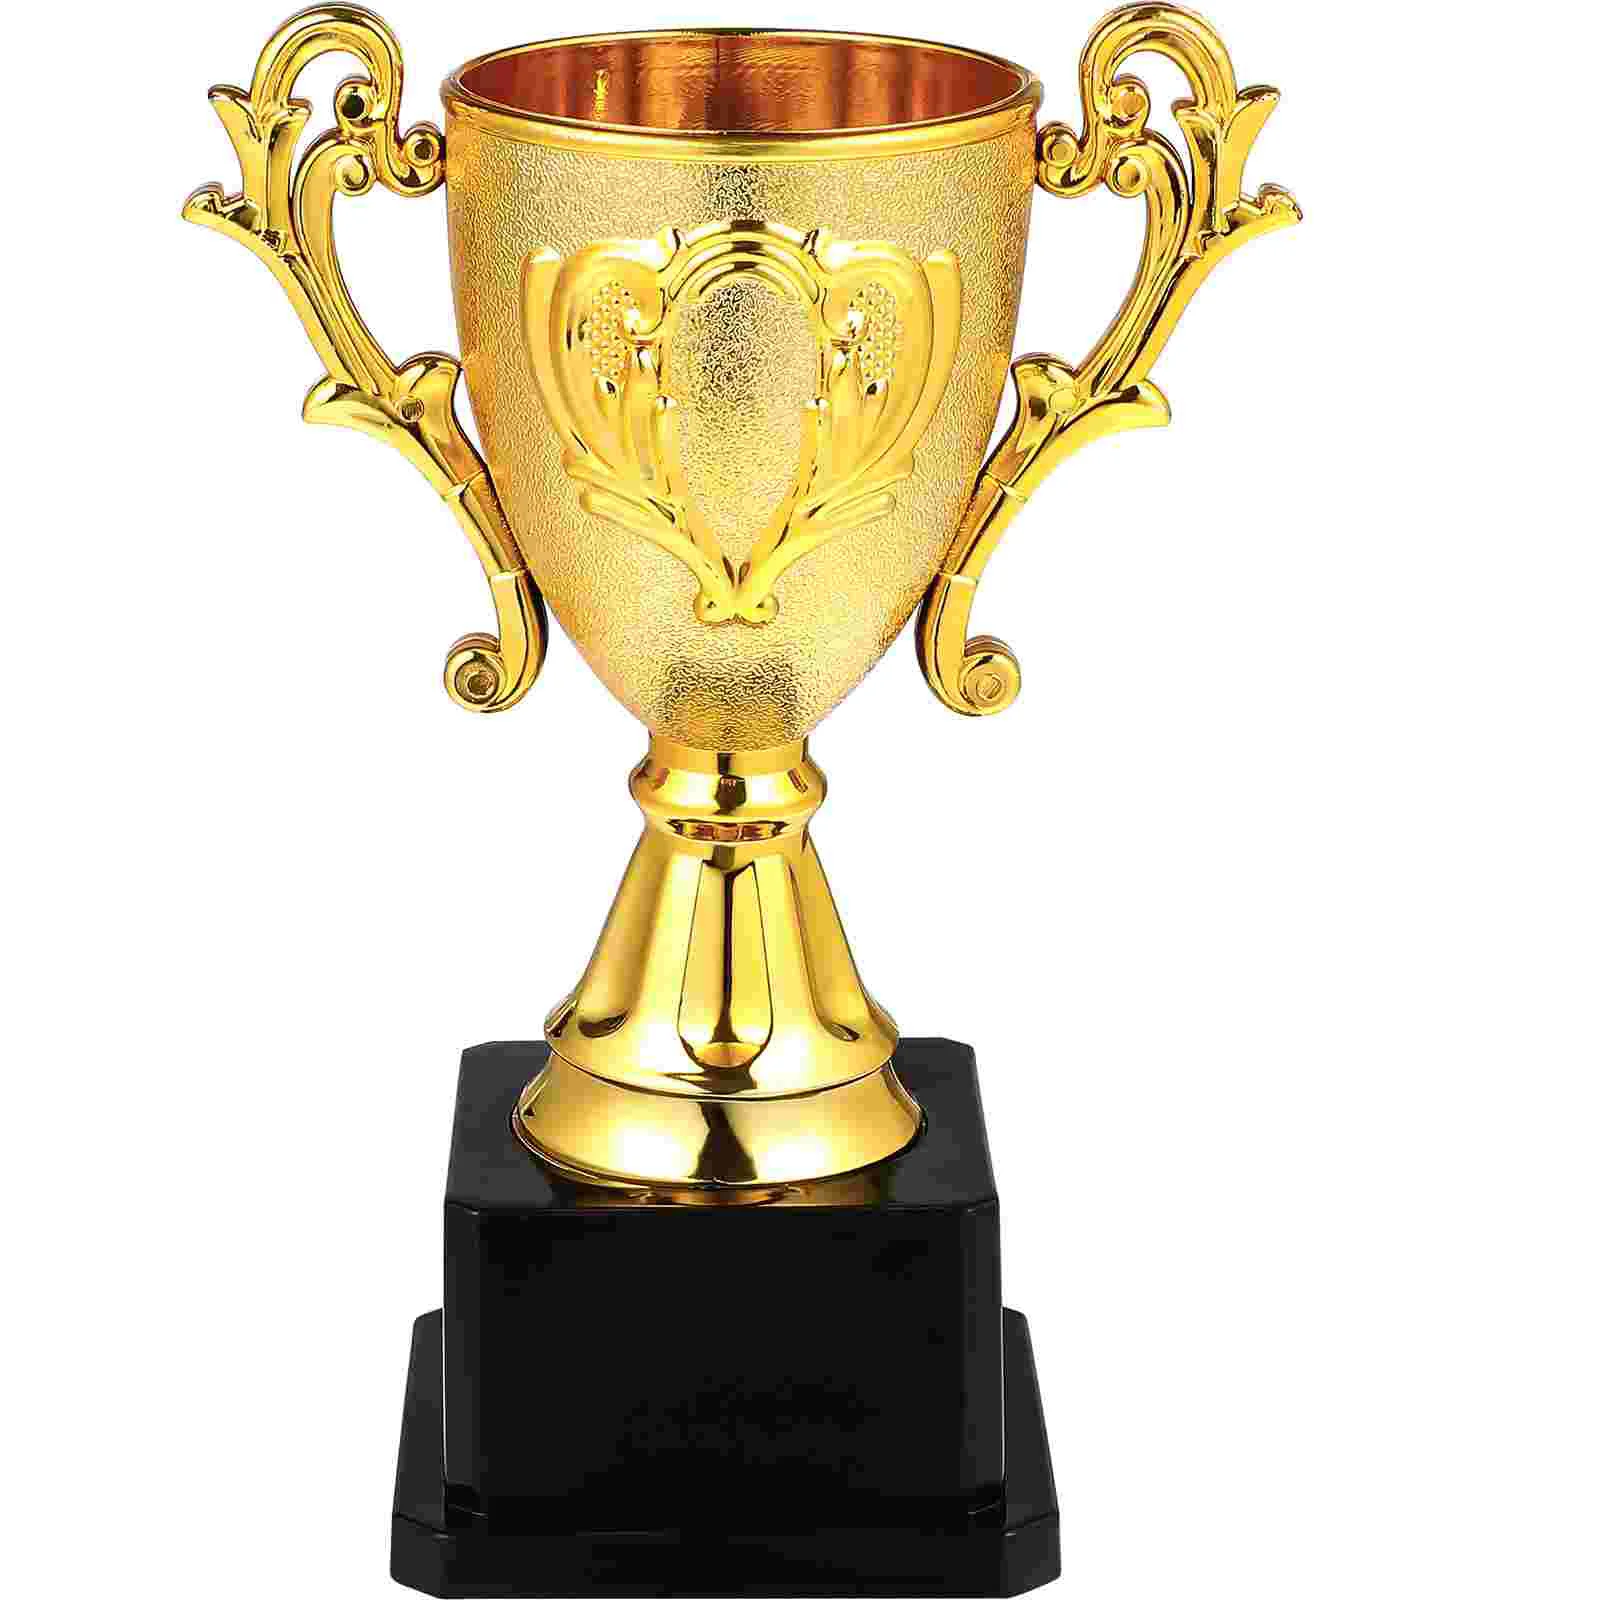 

Plastic Trophy Toy Award Trophies Kids Children Childrens Gifts Winner Awards Playsets Reward